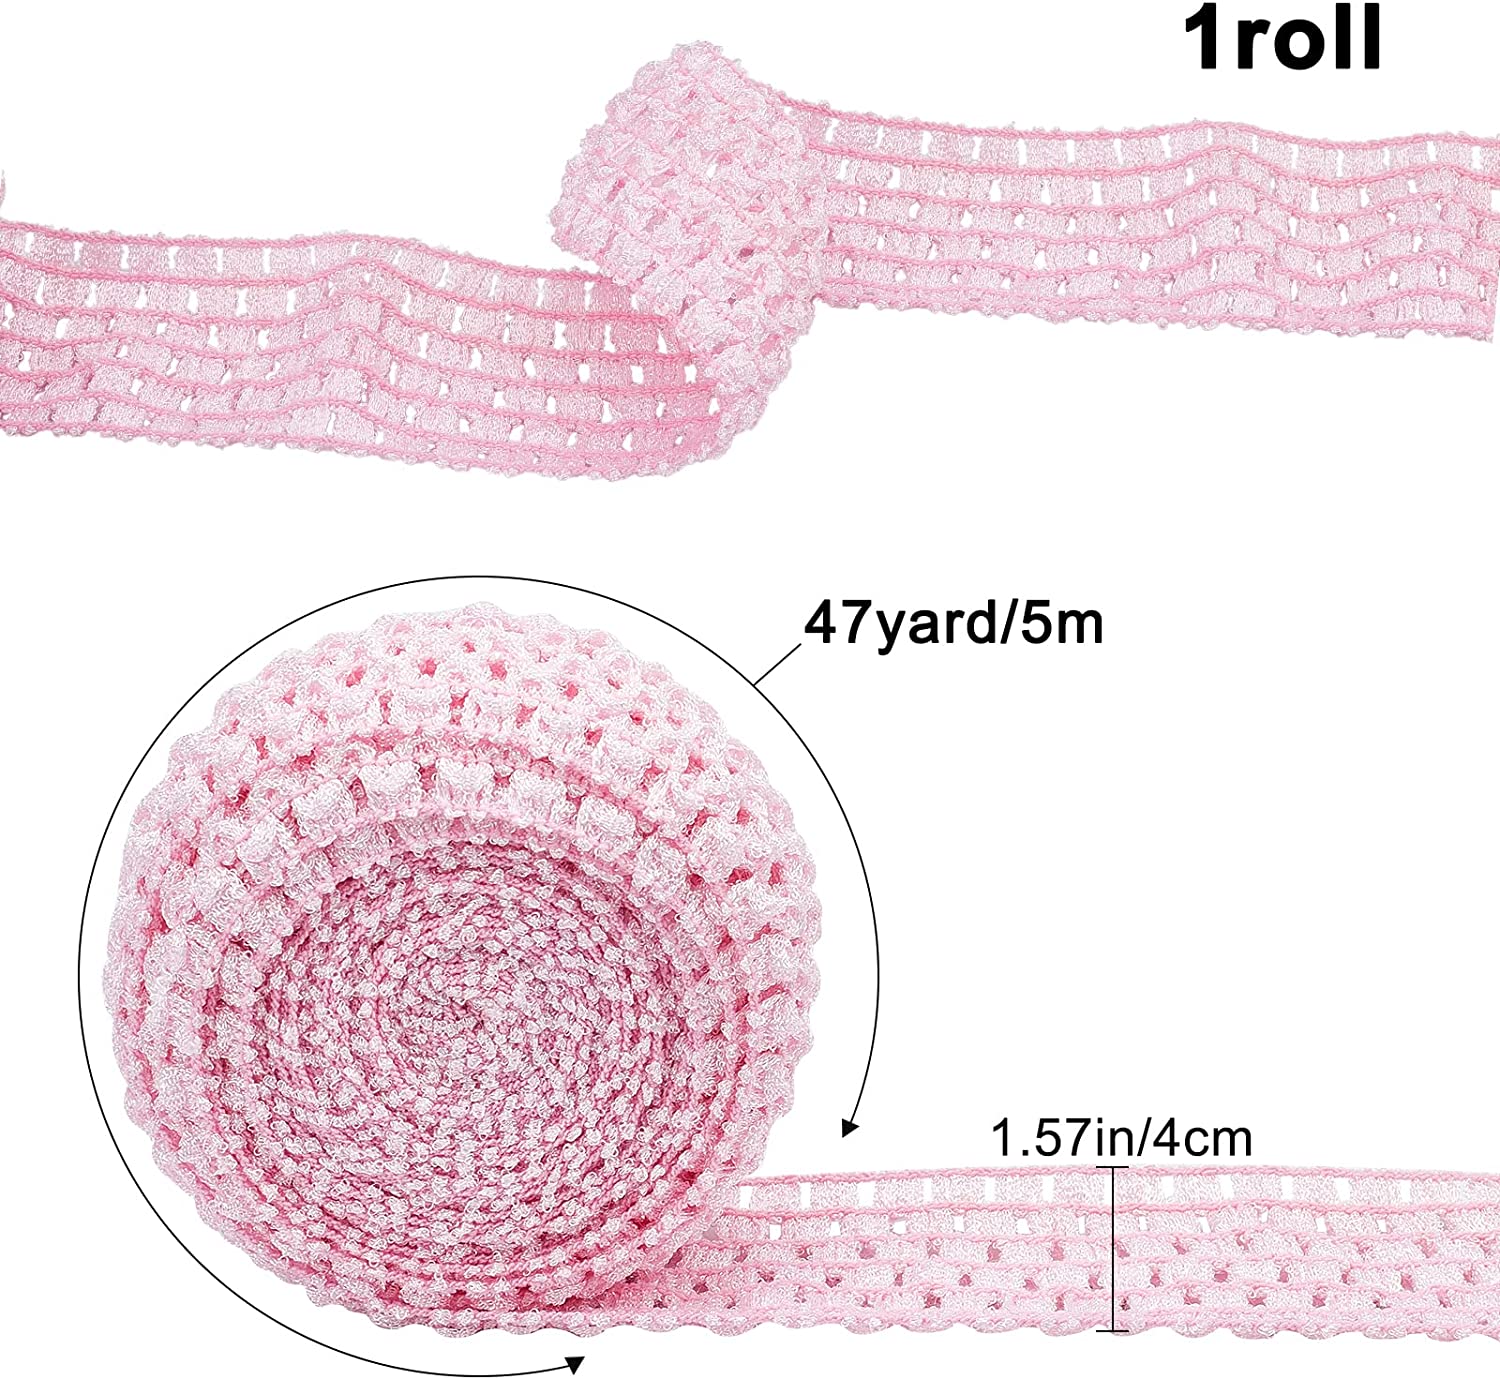 5.5 Yards 1.7 Wide Elastic Crochet Headband Ribbon Crochet Stretch Trim Fabric for Hair Accessories Tube Top, Light Pink